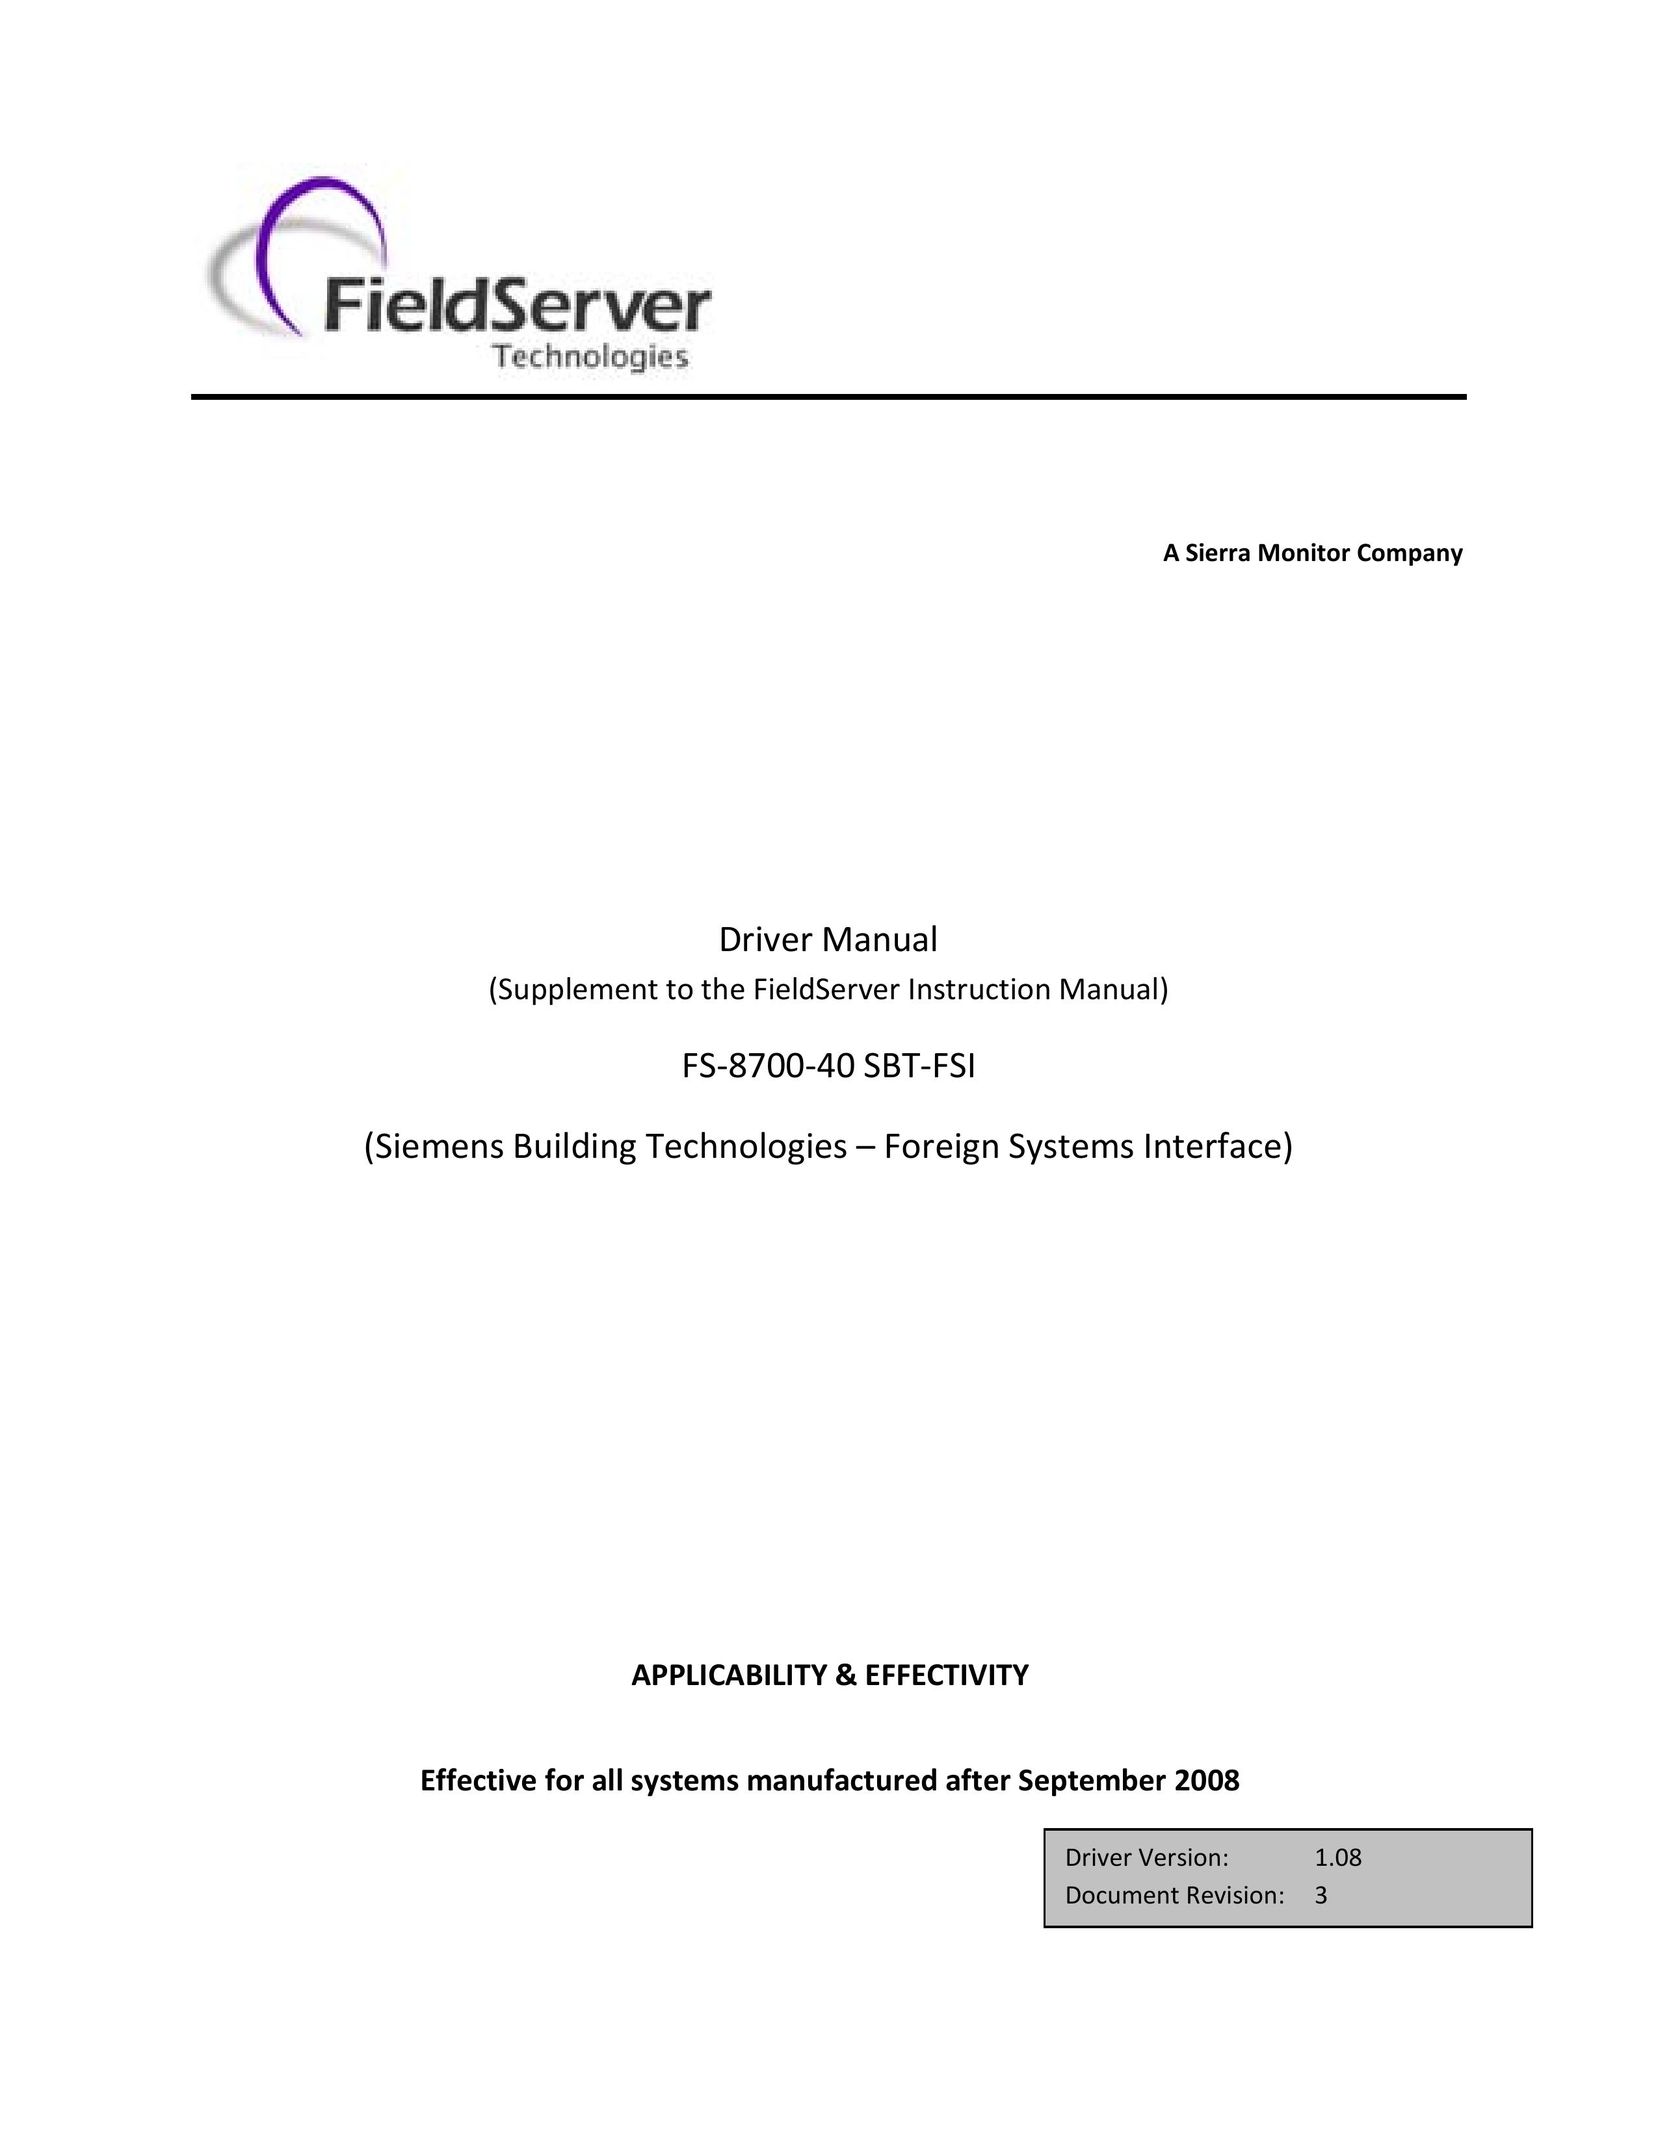 FieldServer FS-8700-40 Computer Drive User Manual